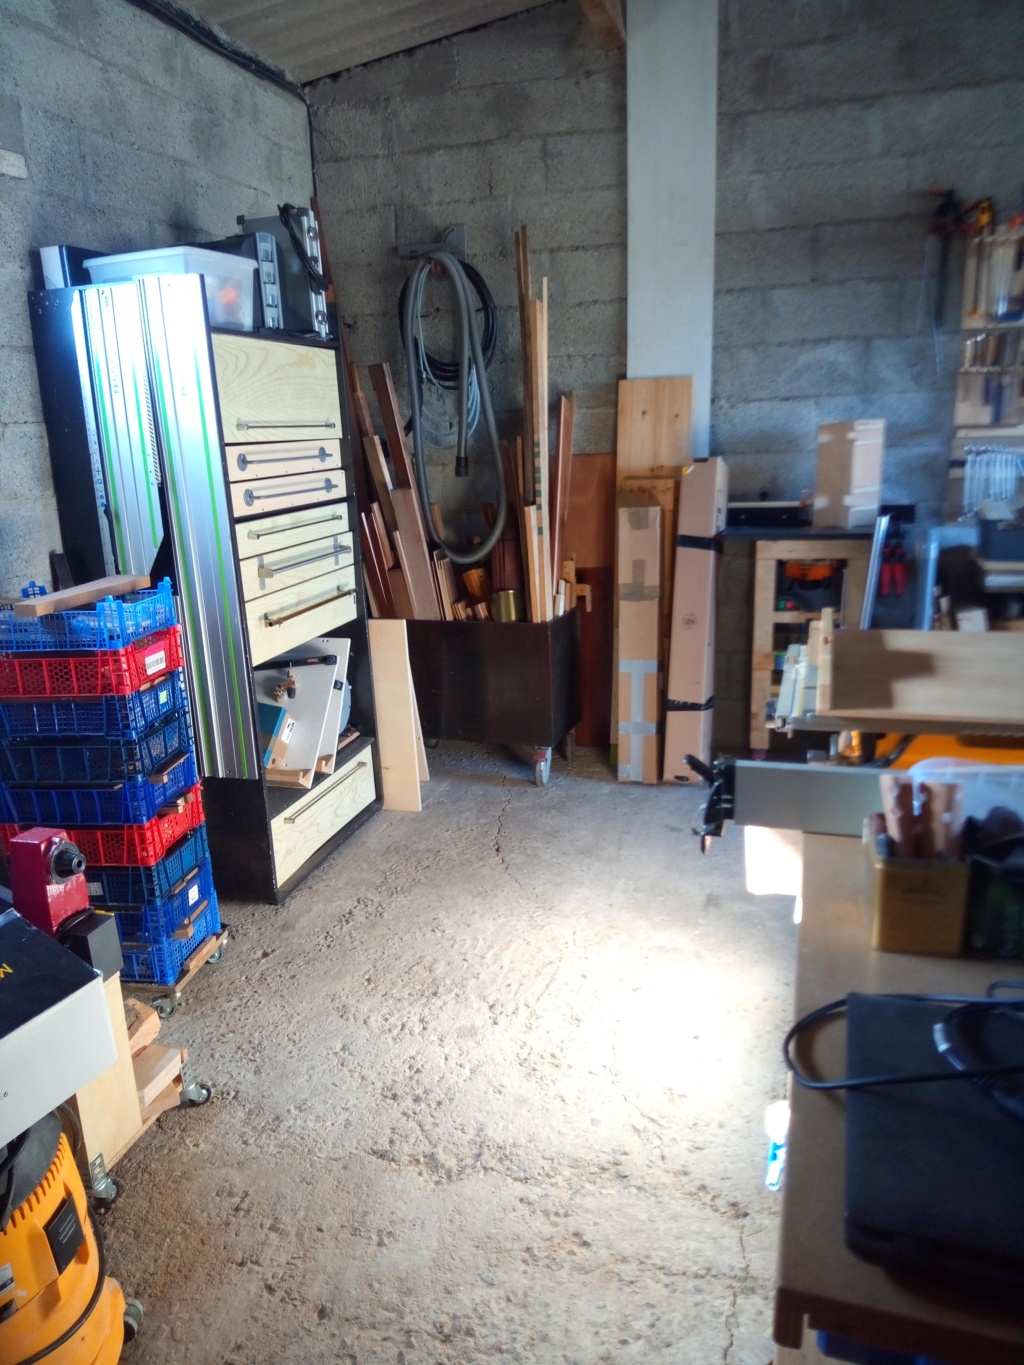 Mon garage faisant office d'atelier - Page 2 Img_2425